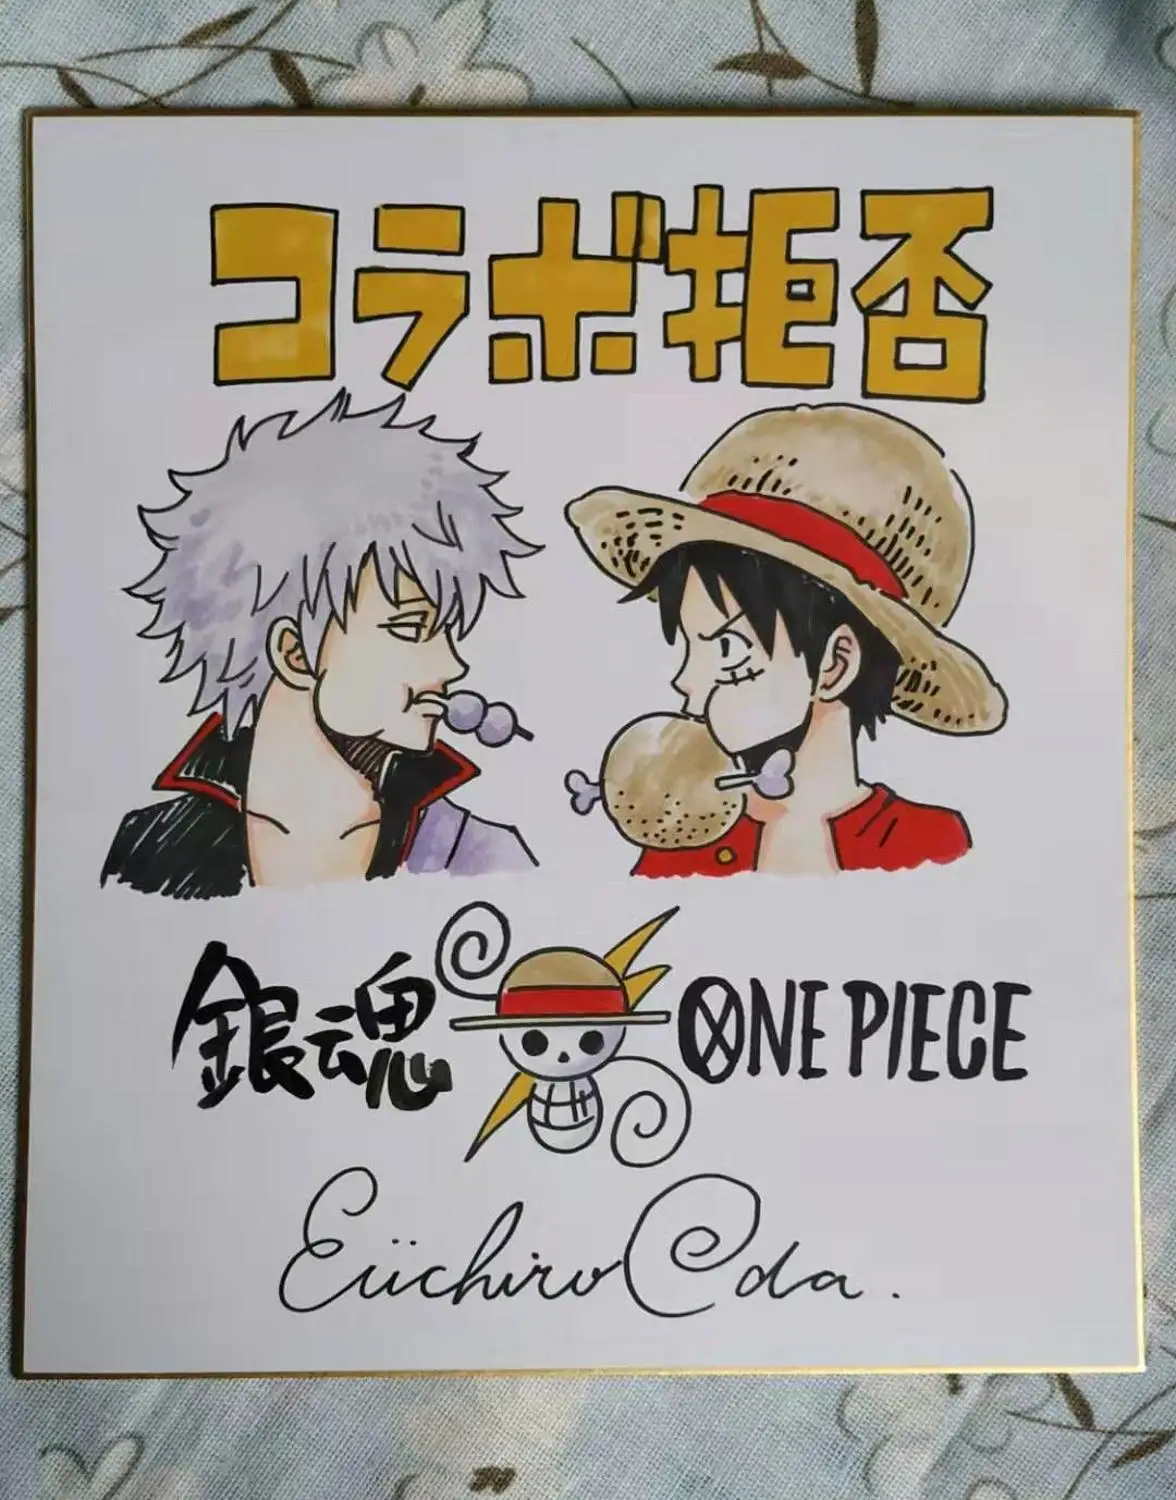 ONE PIECE Eiichiro Oda Autograph Shikishi 1500 ltd mini colored paper